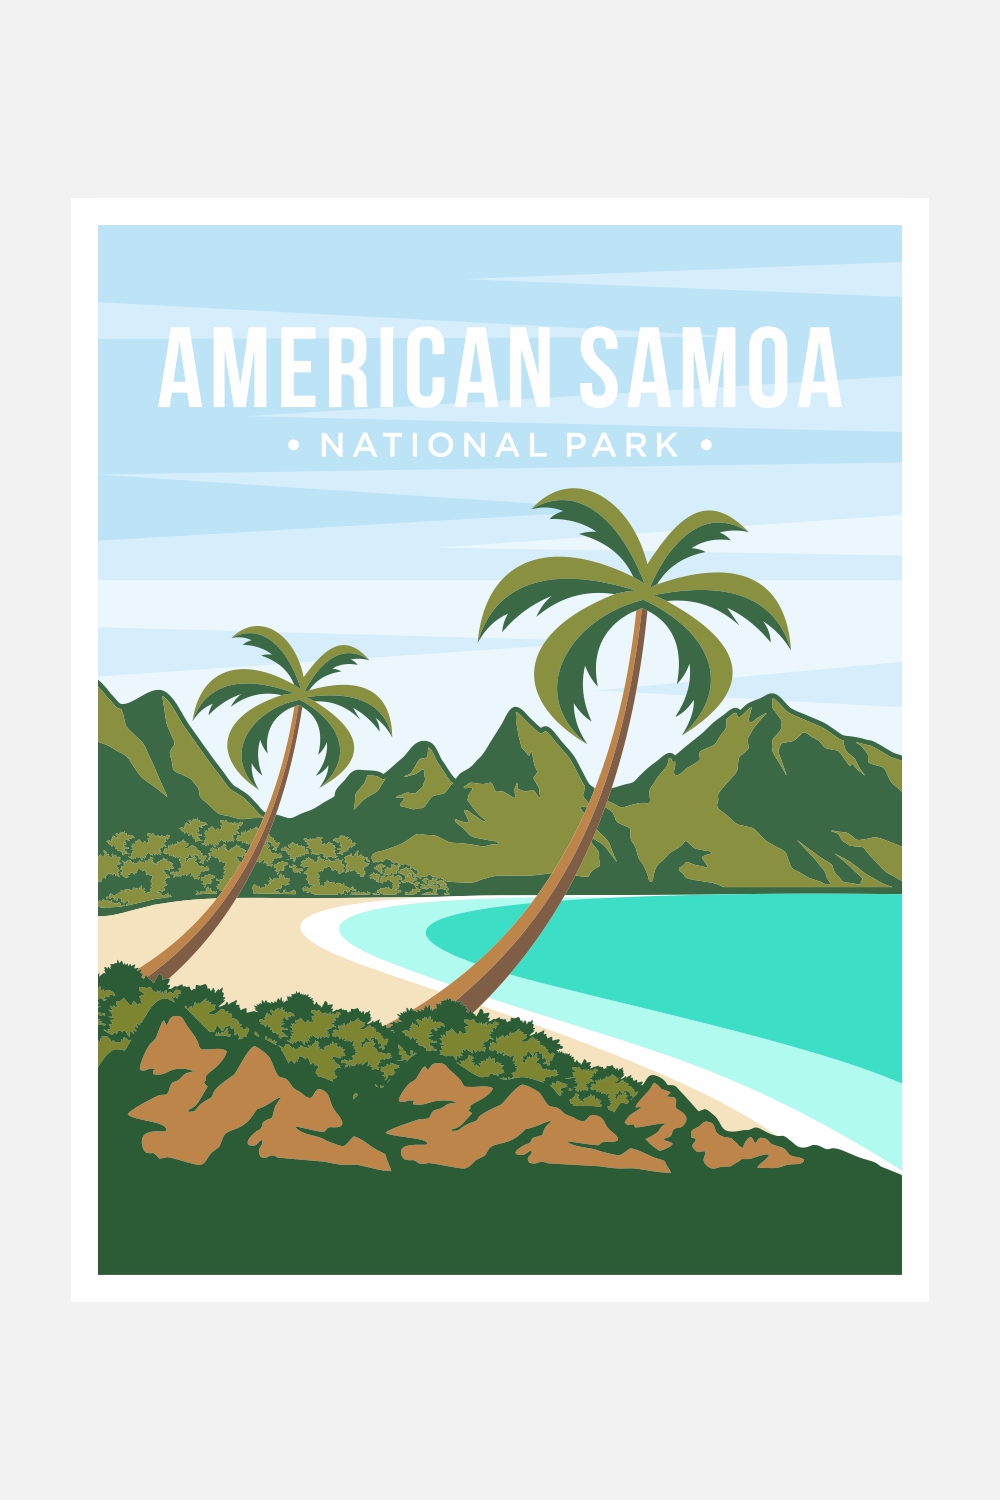 American Samoa National Park poster vector illustration design - $8 pinterest preview image.